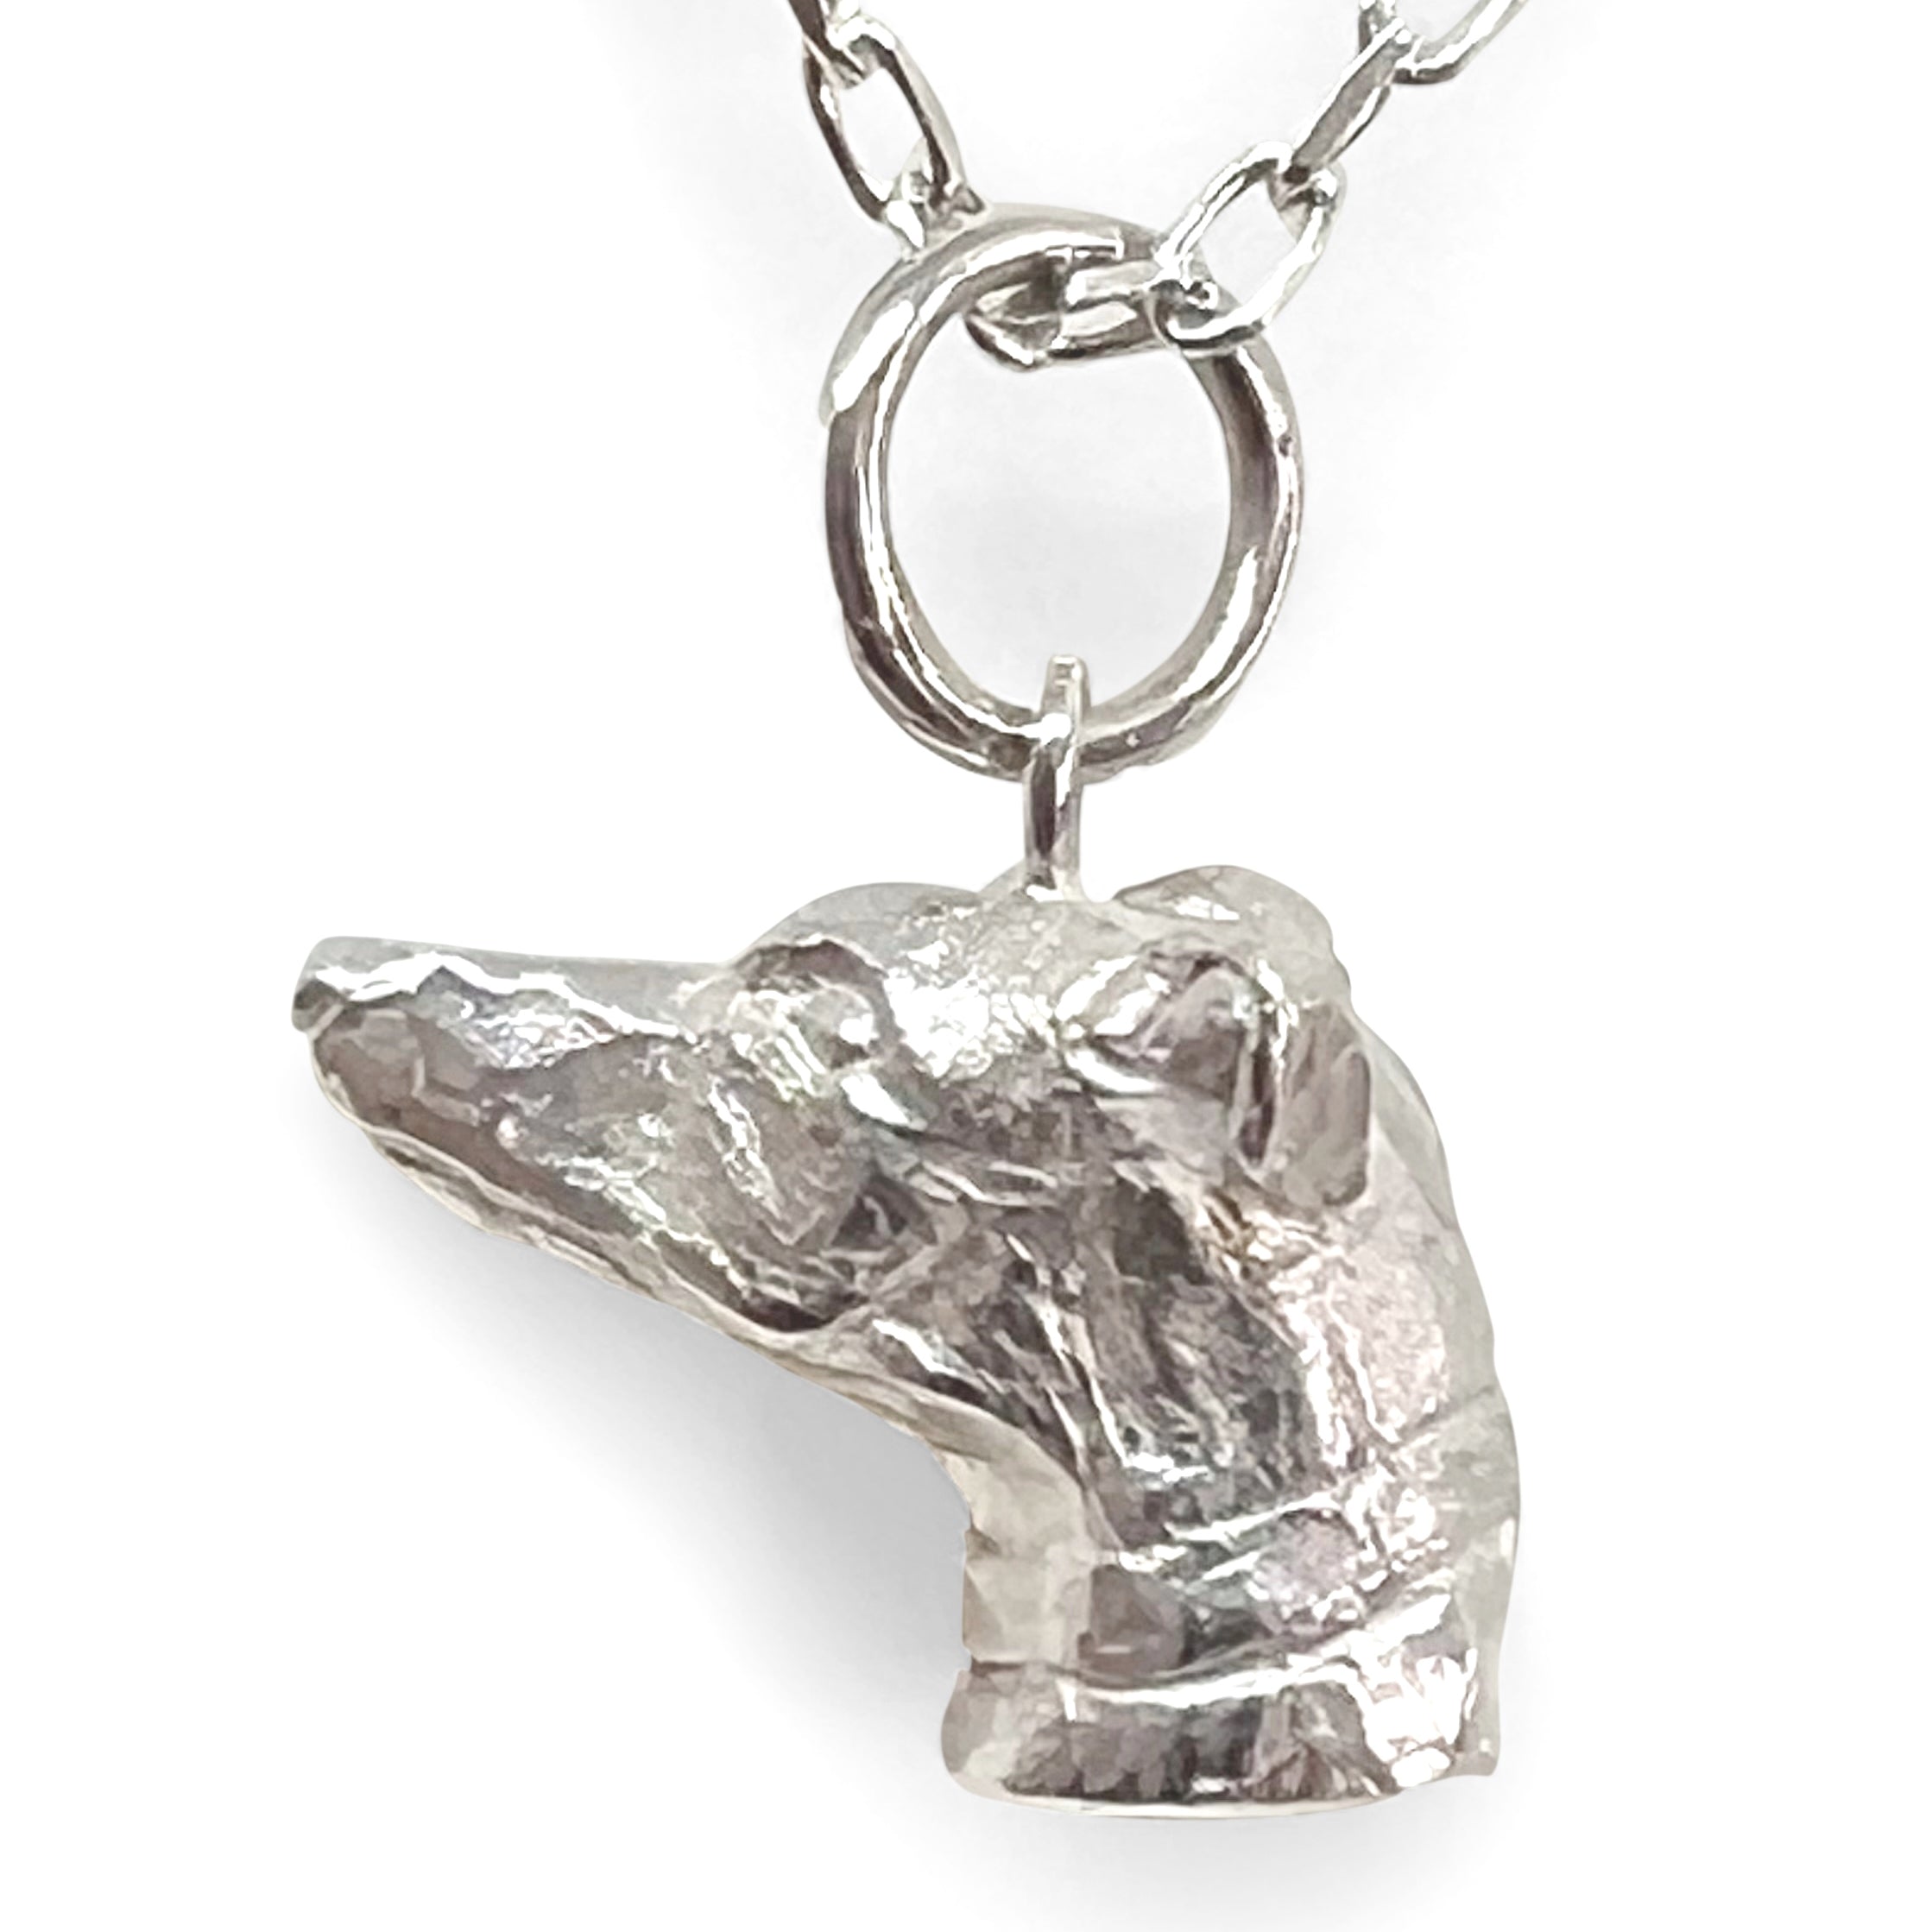 Greyhound Pendant by Paul Eaton Sculptor